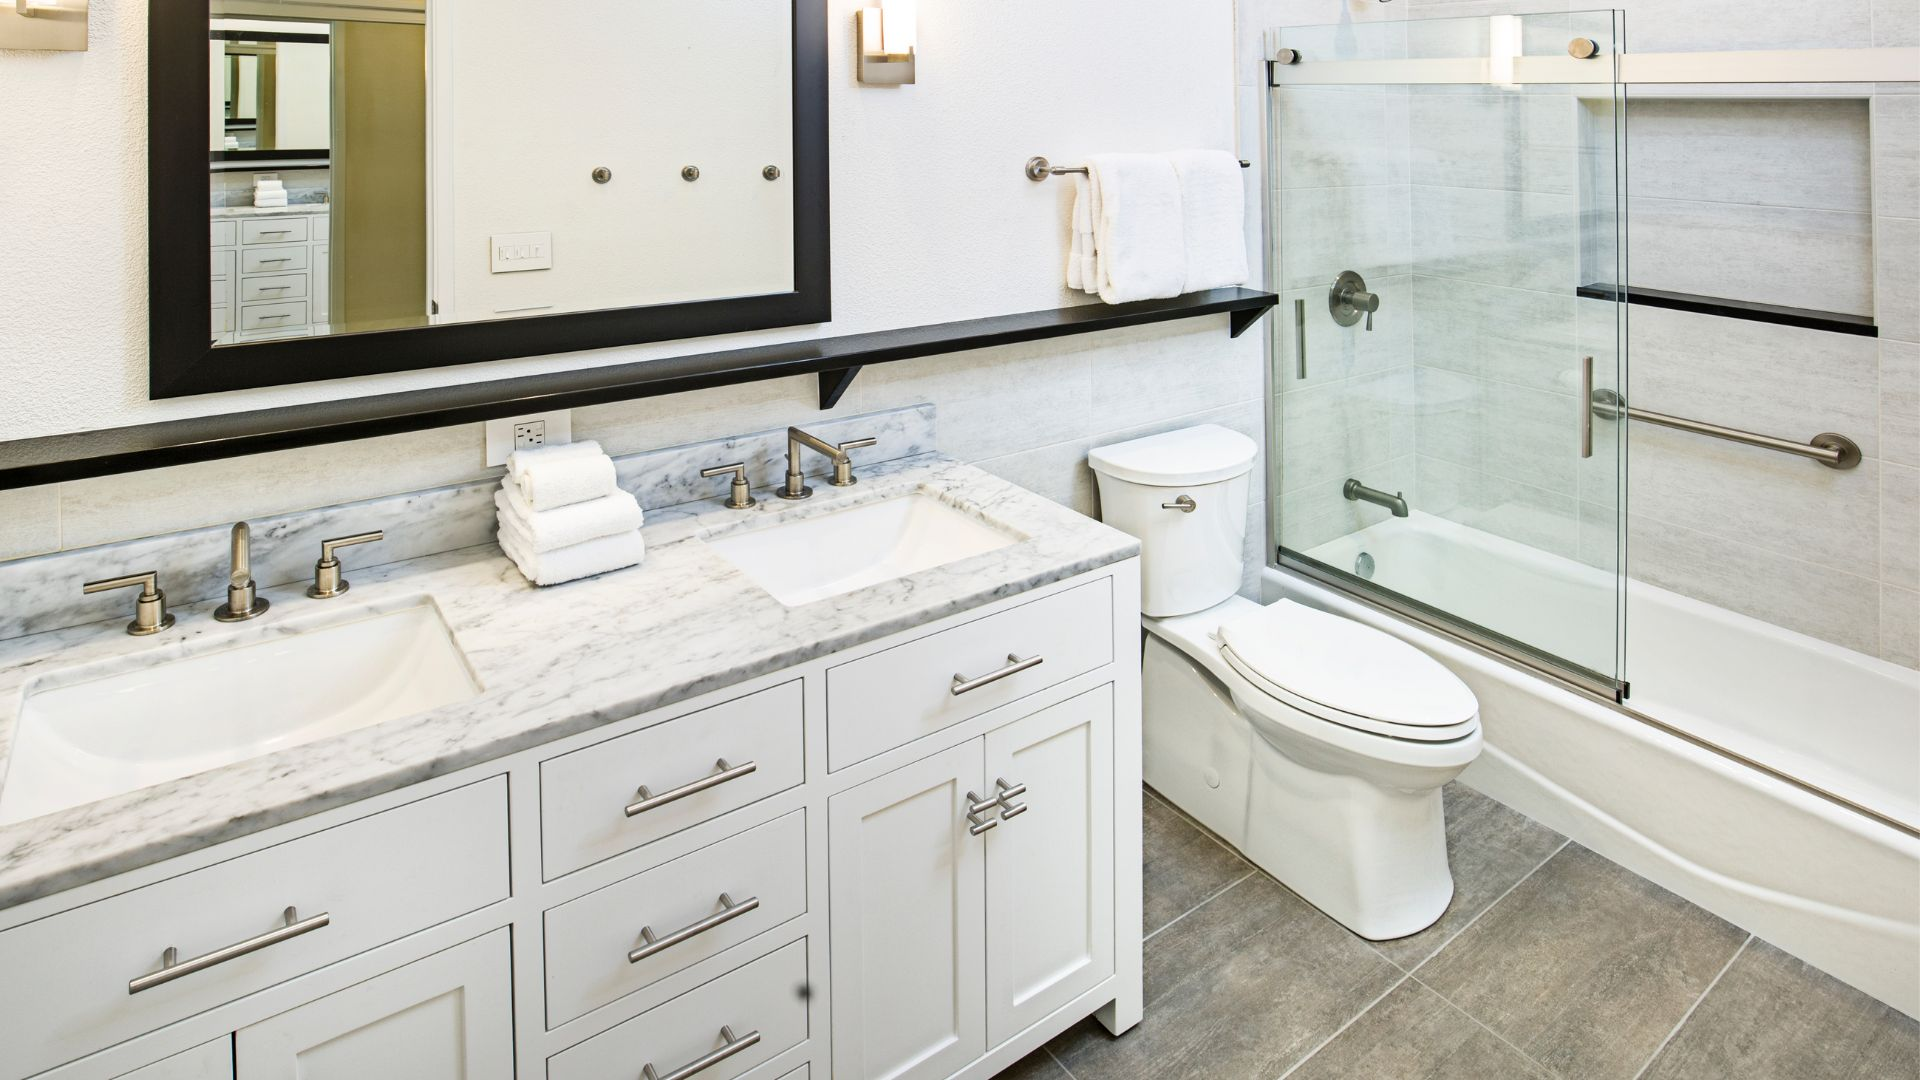 Benefits of renovating small bathrooms